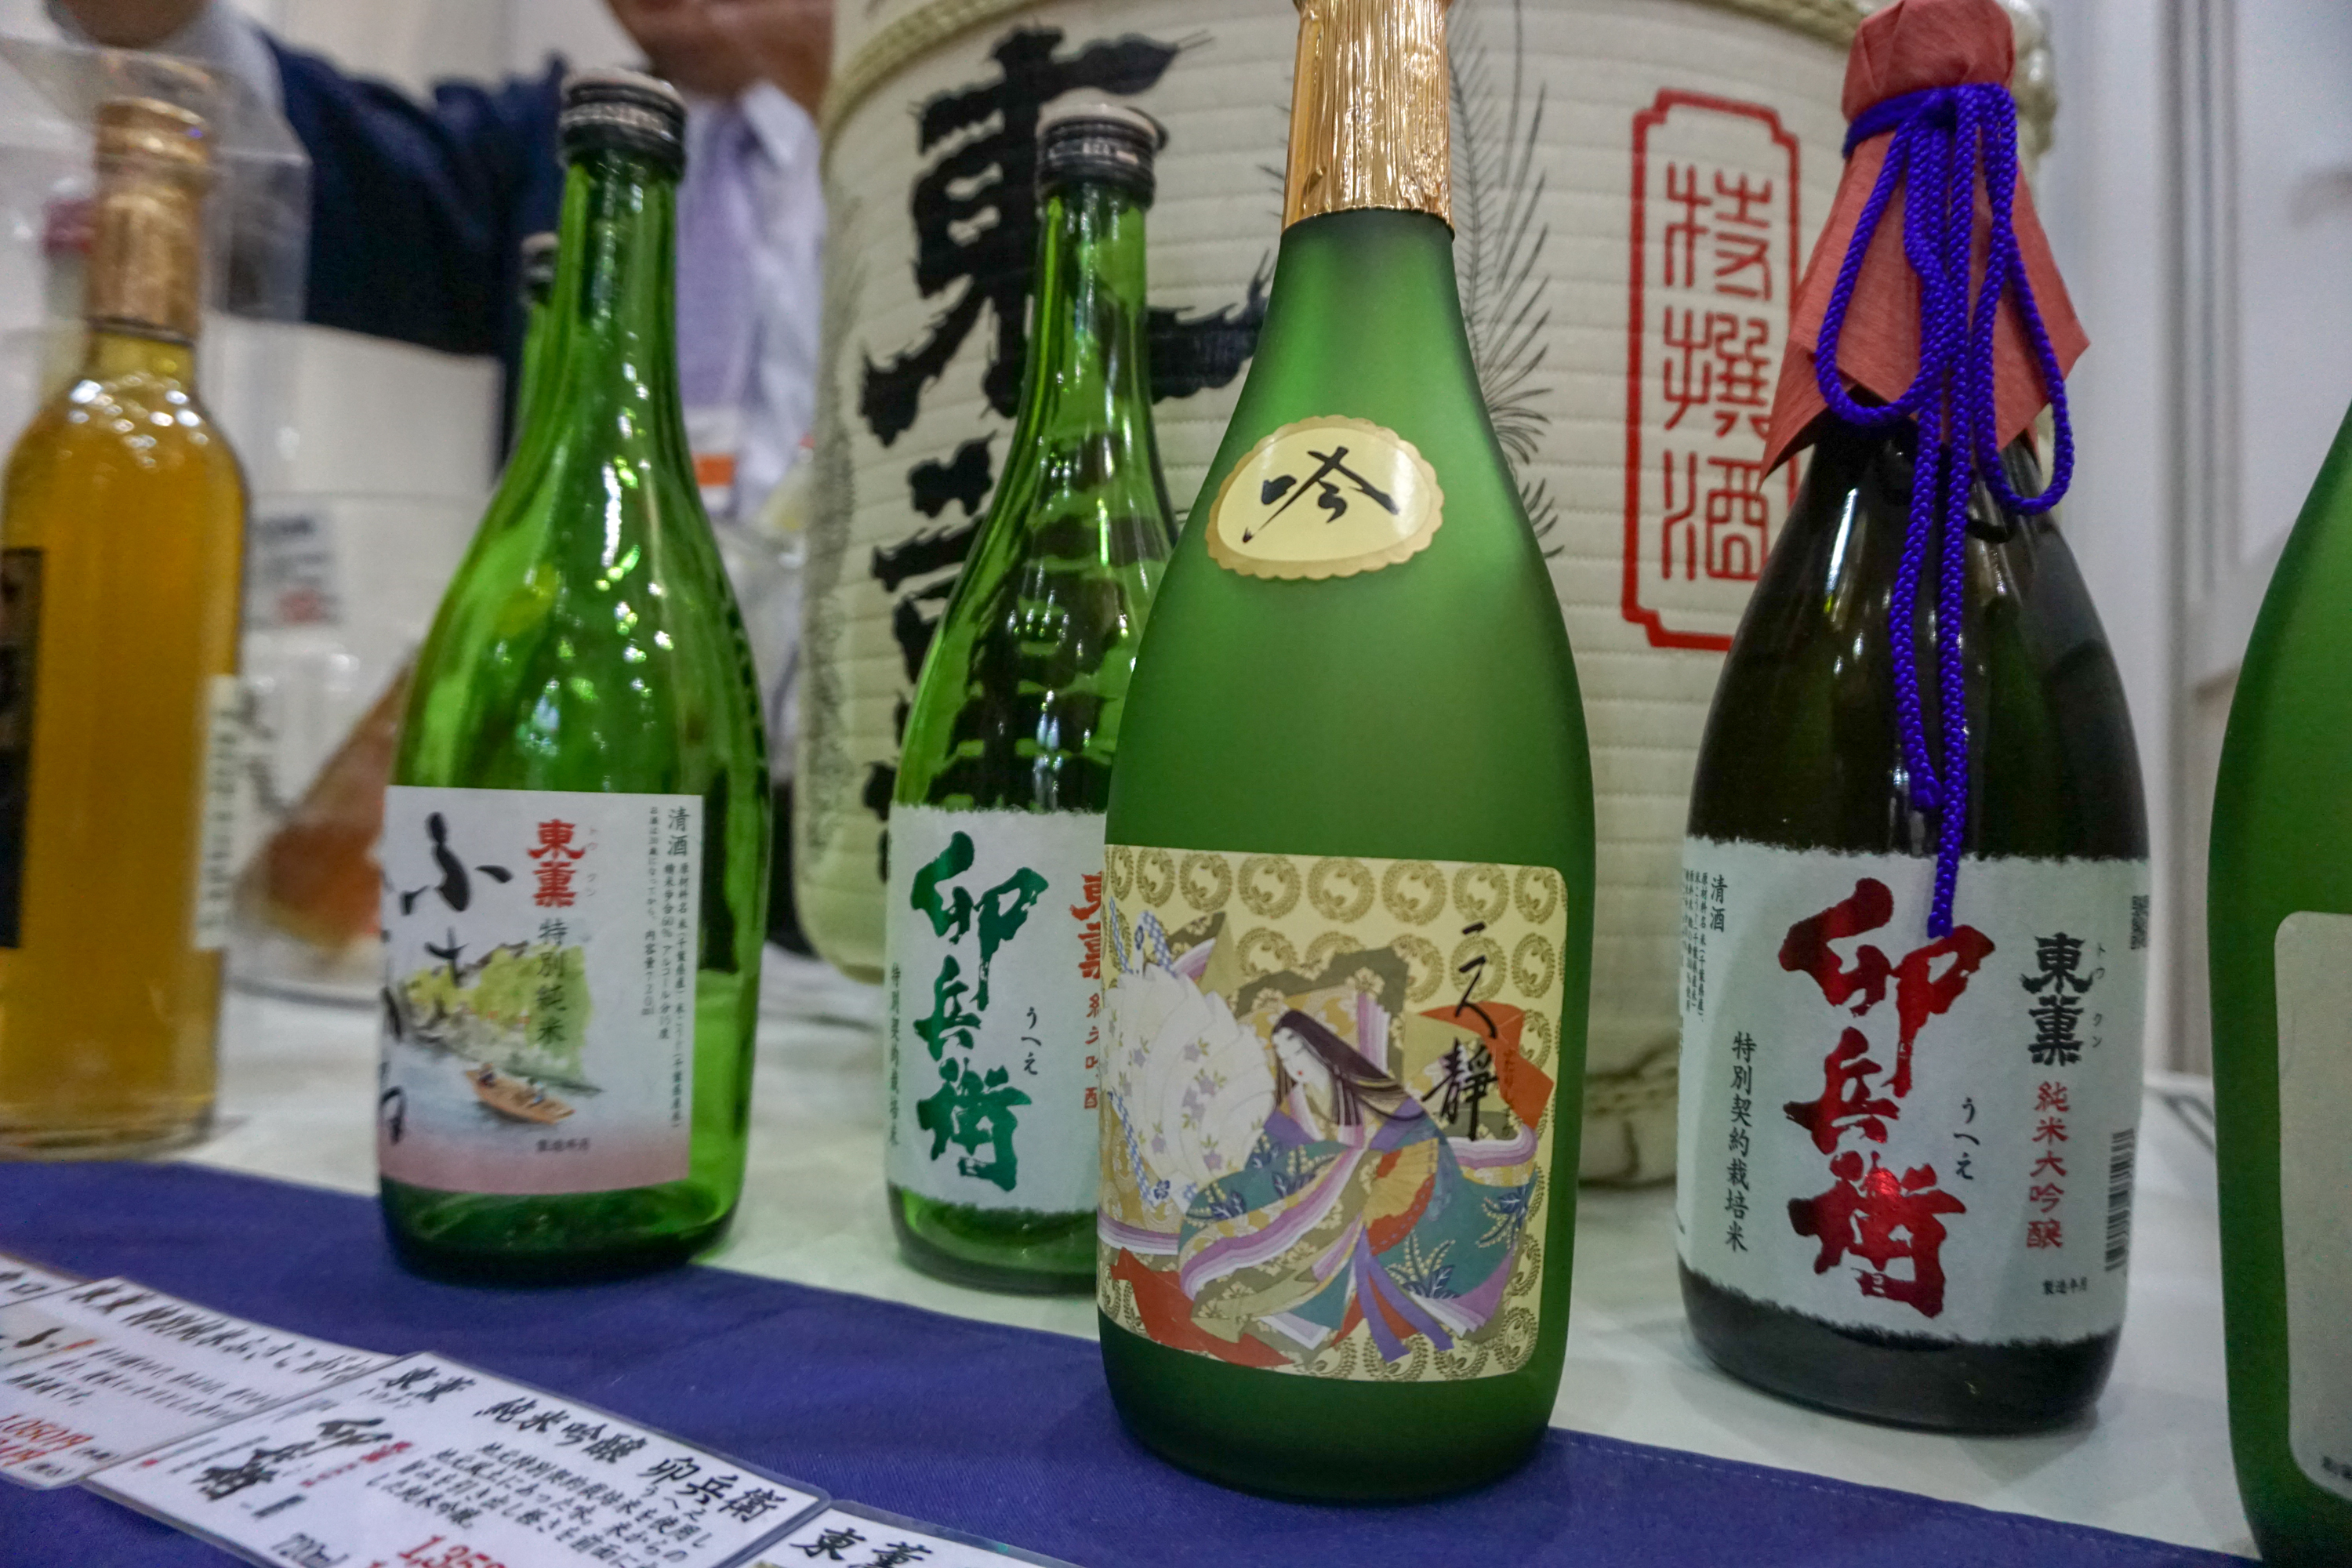 Start the day with Sake tasting